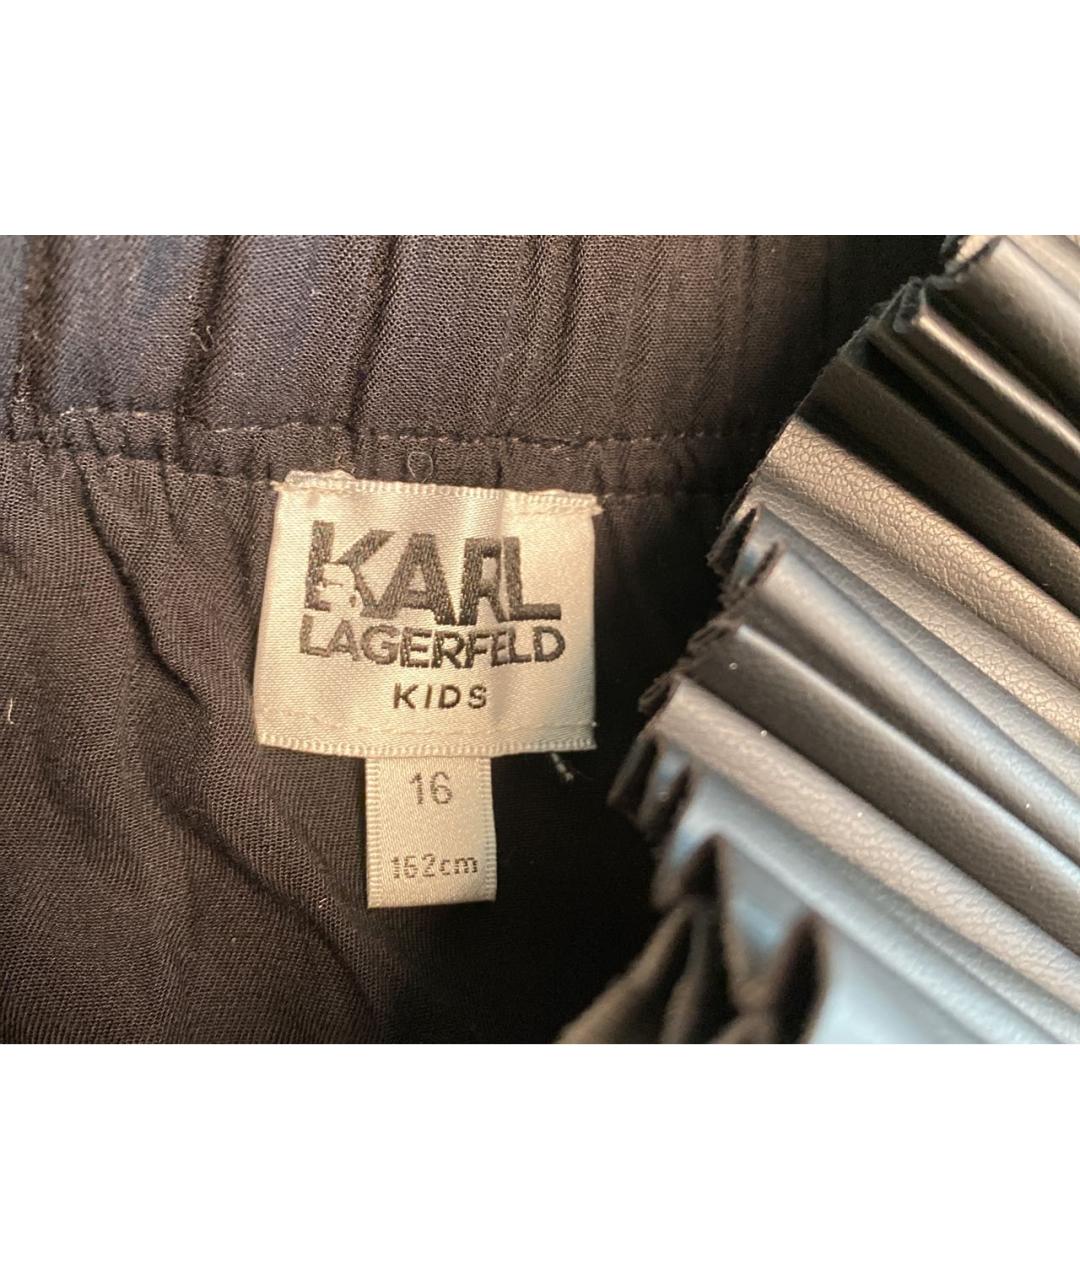 KARL LAGERFELD KIDS Черная полиэстеровая юбка, фото 4